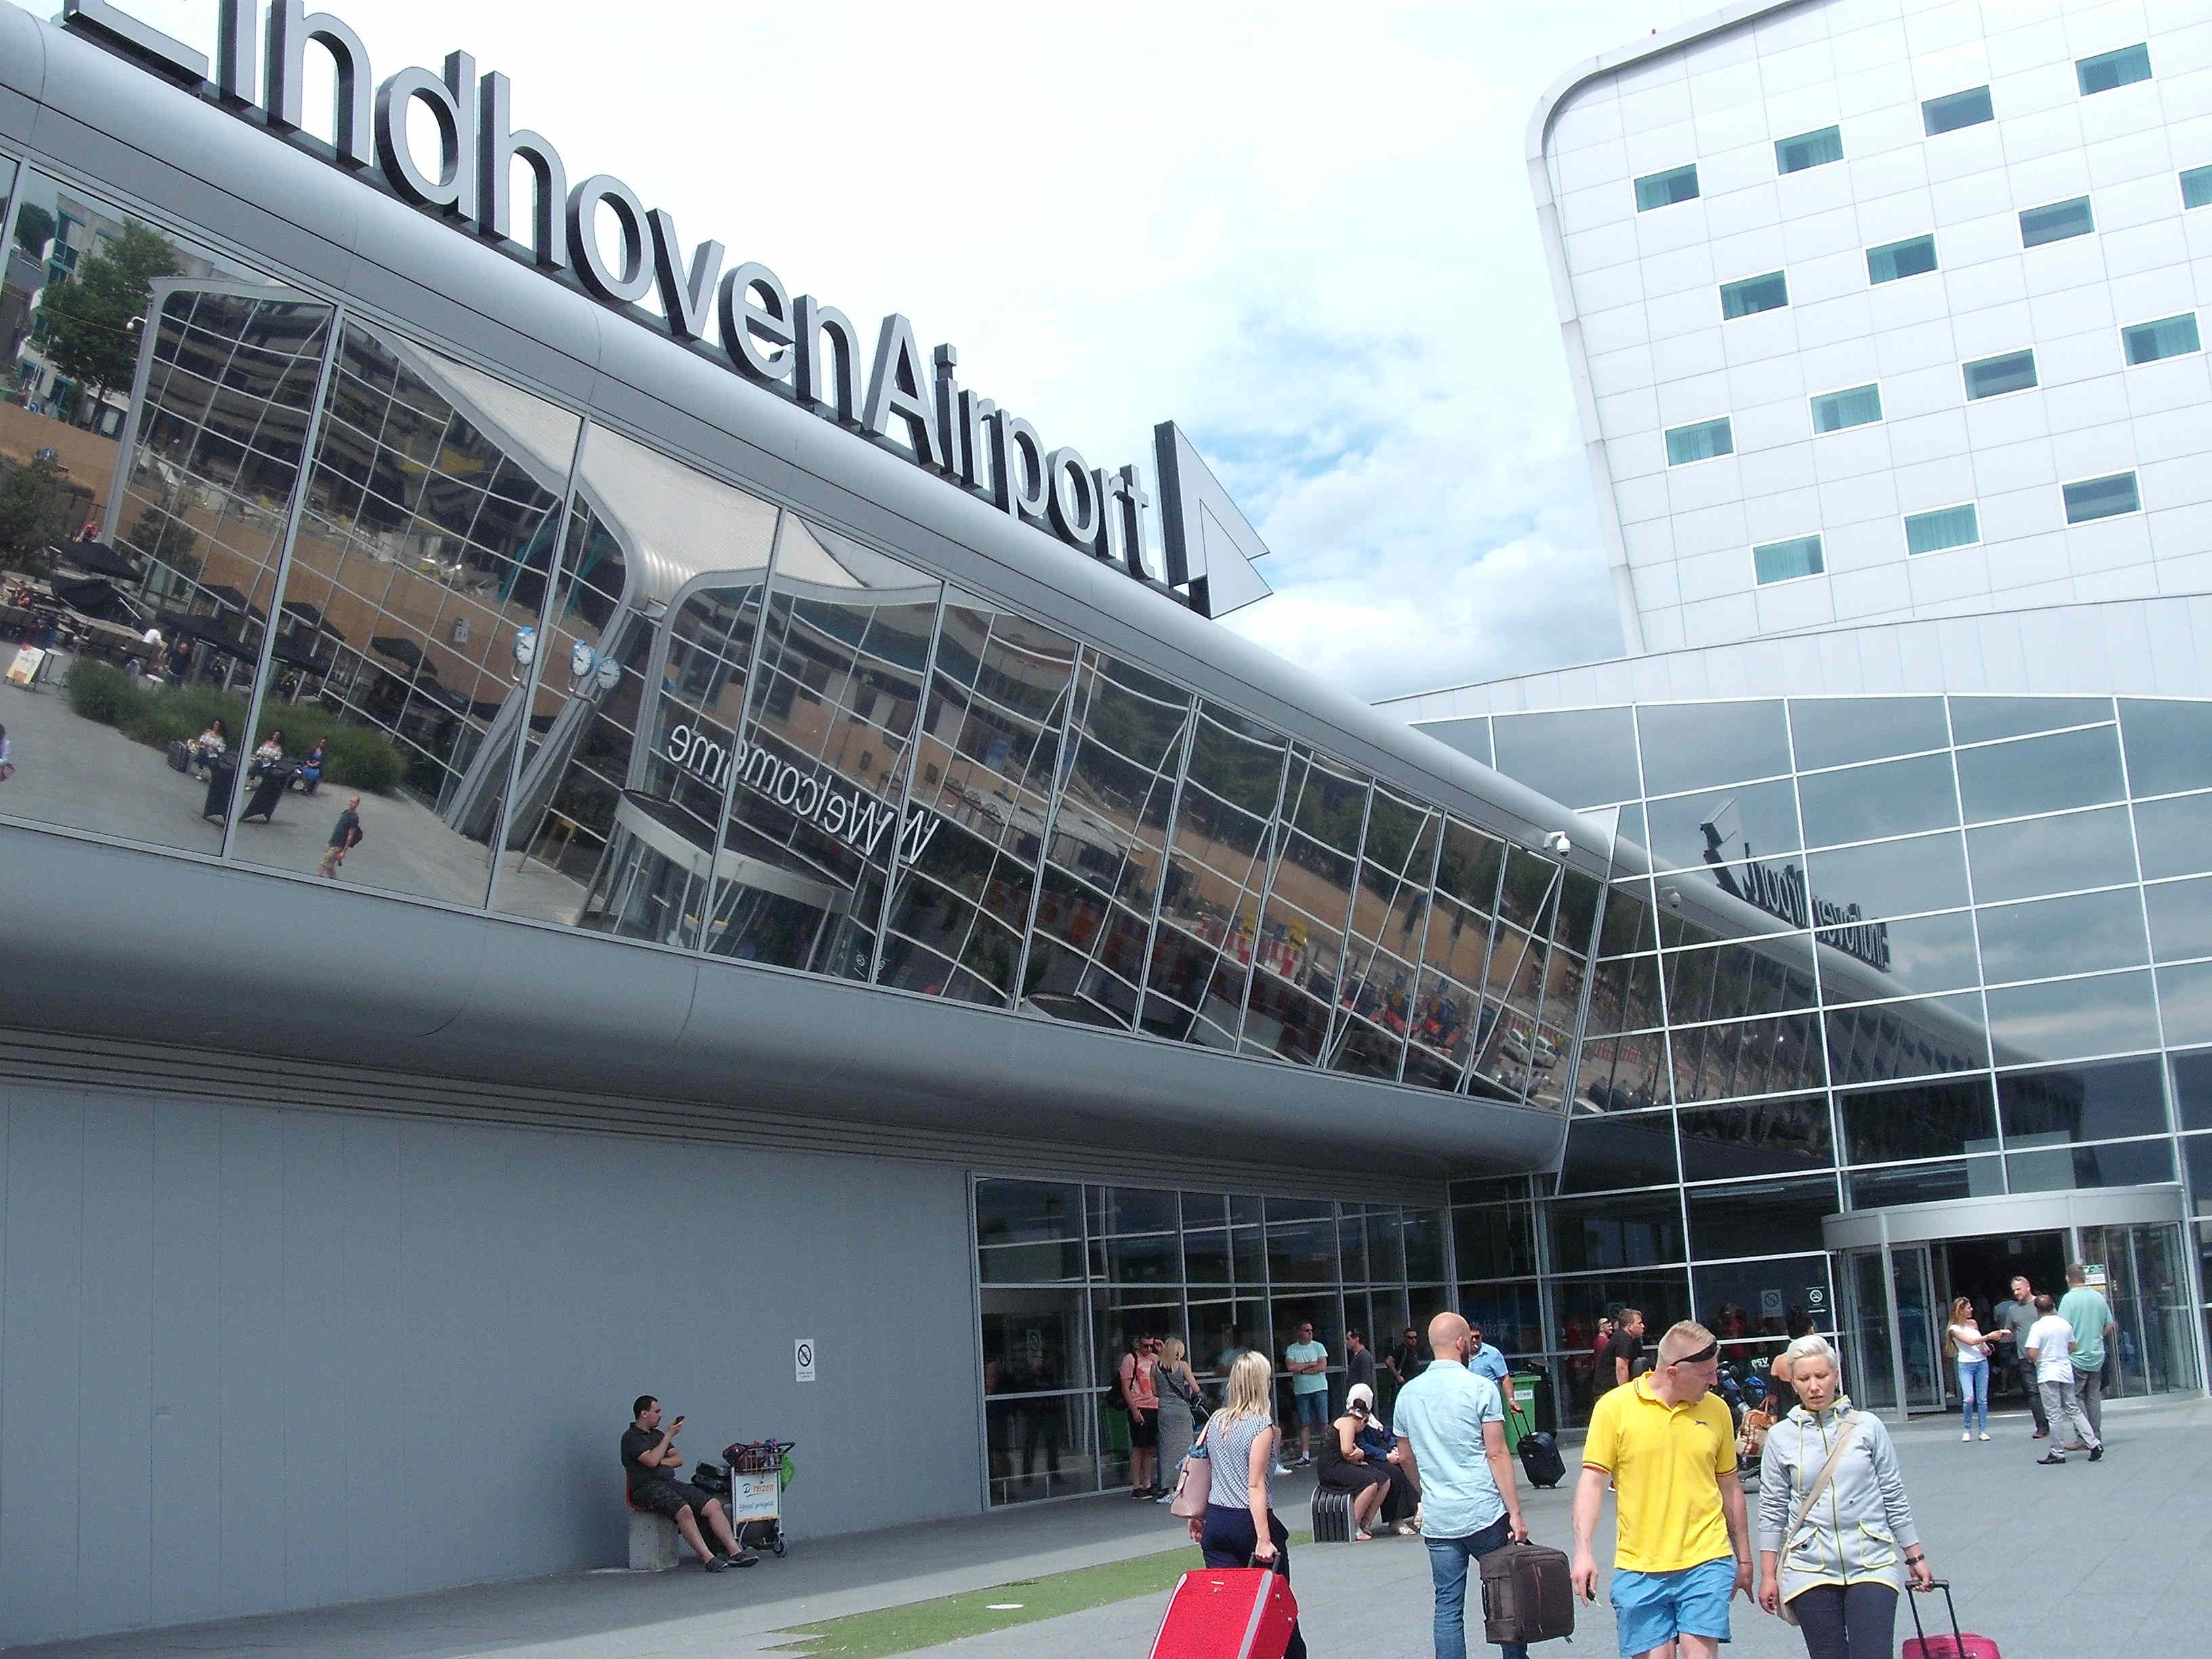 Eindhoven Airport perkt eigen groei in